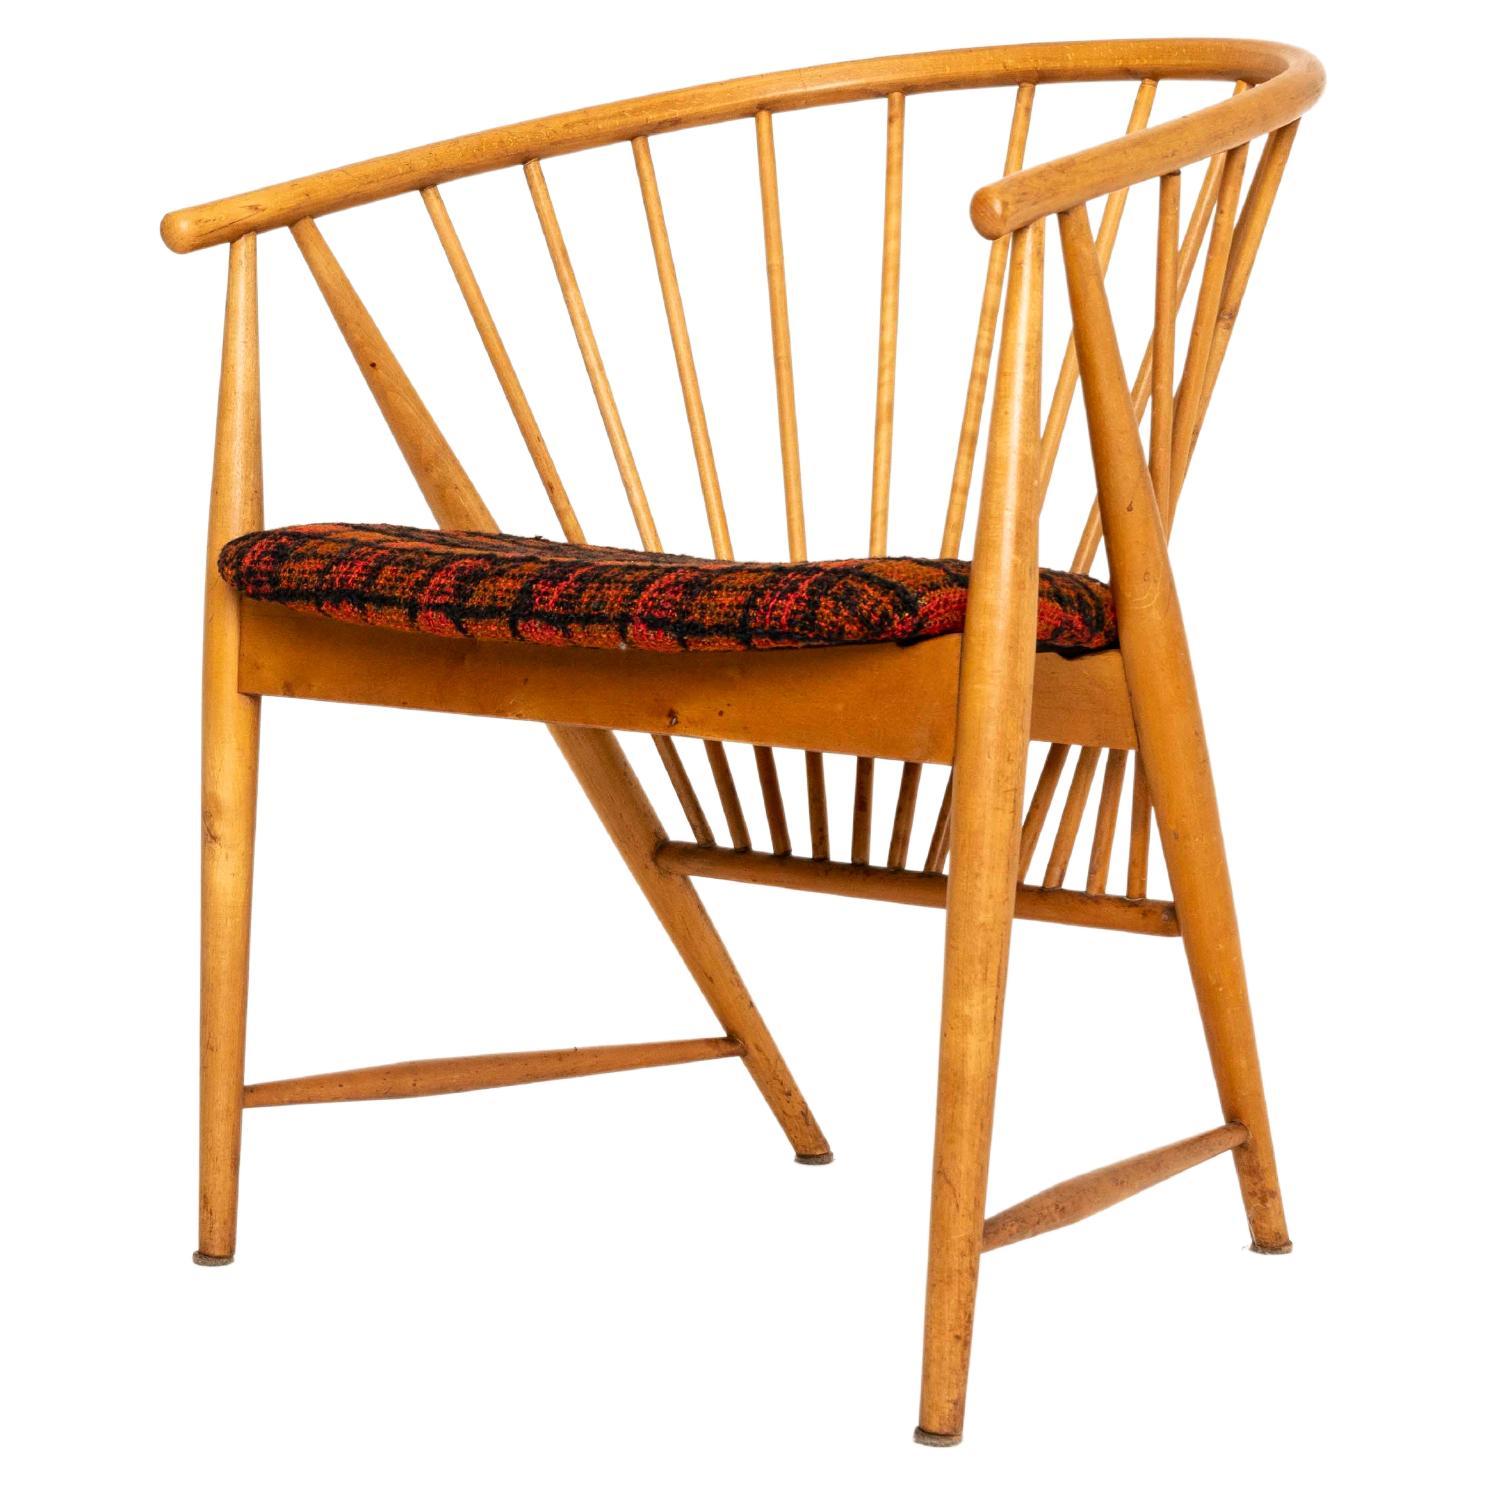 'Sunfeather' Chair by Sonna Rosen, Sweden 1950s